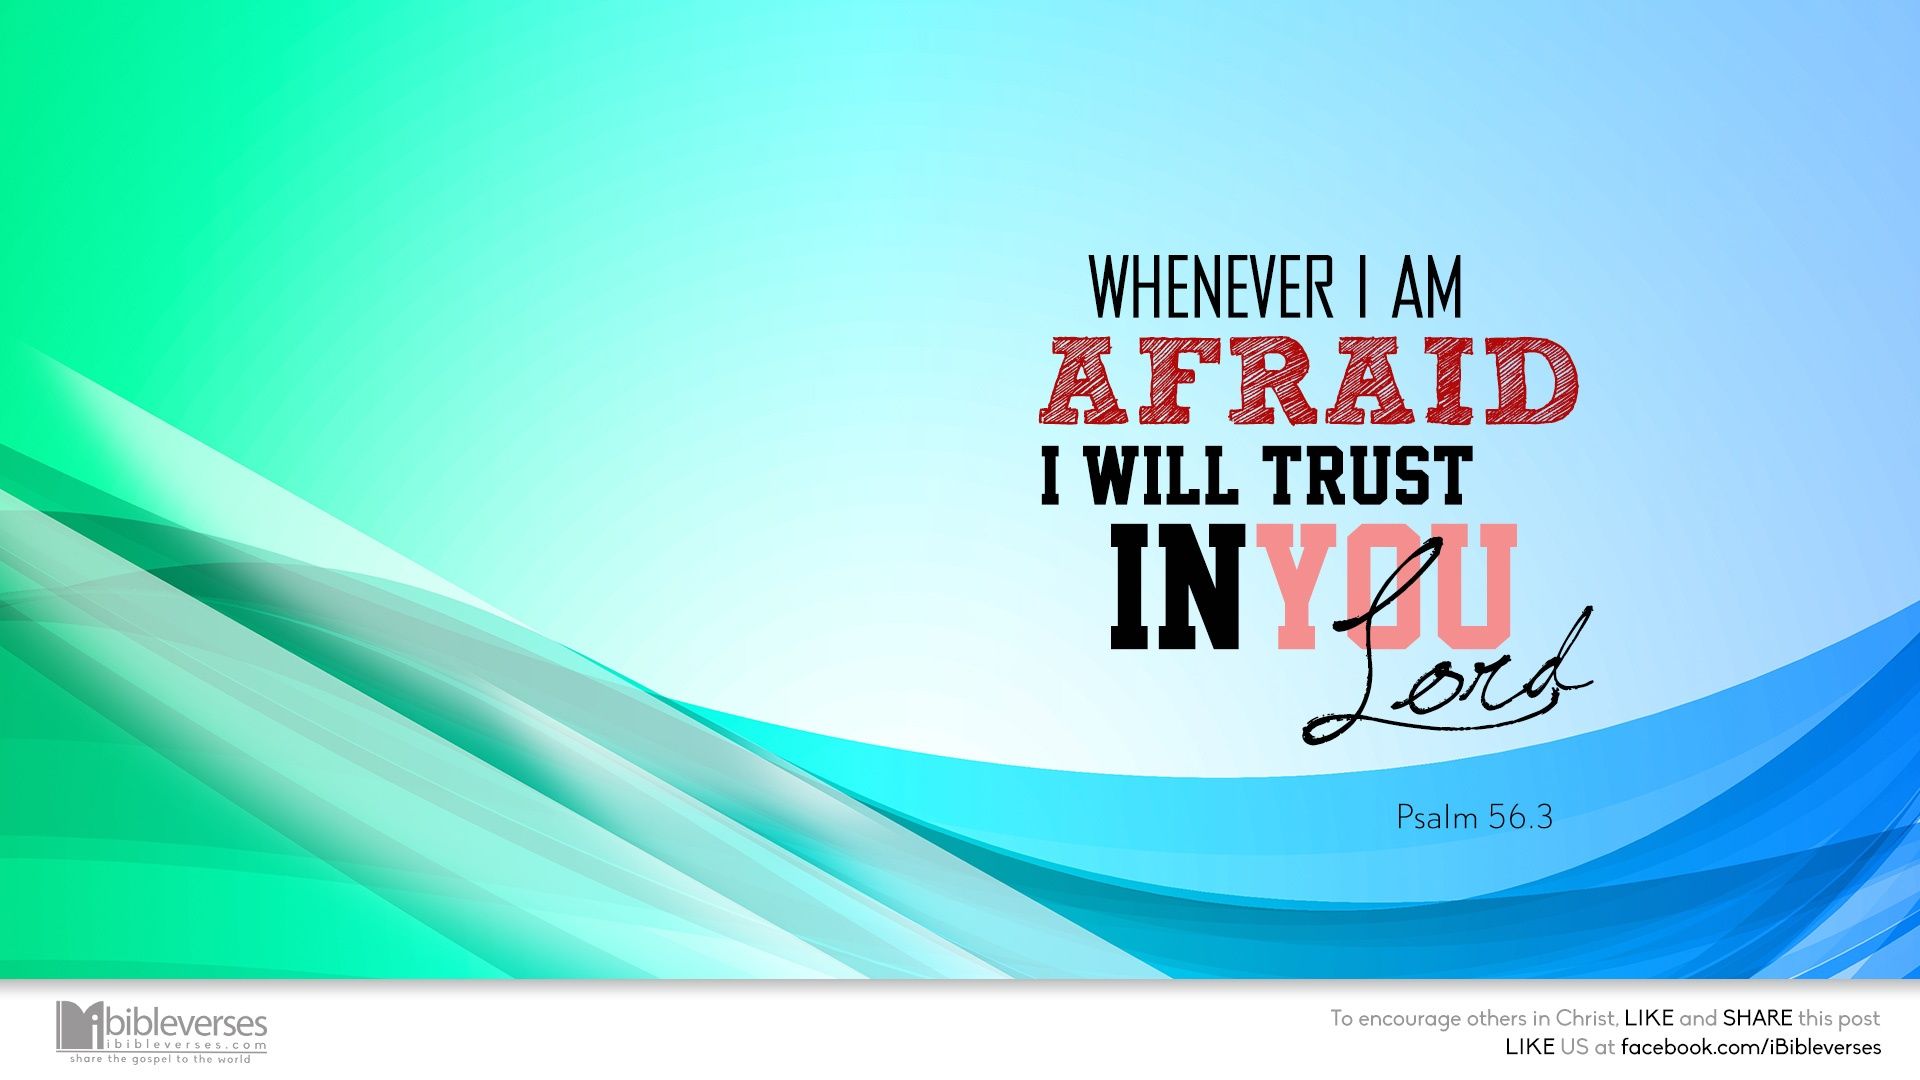 Whenever I am afraid